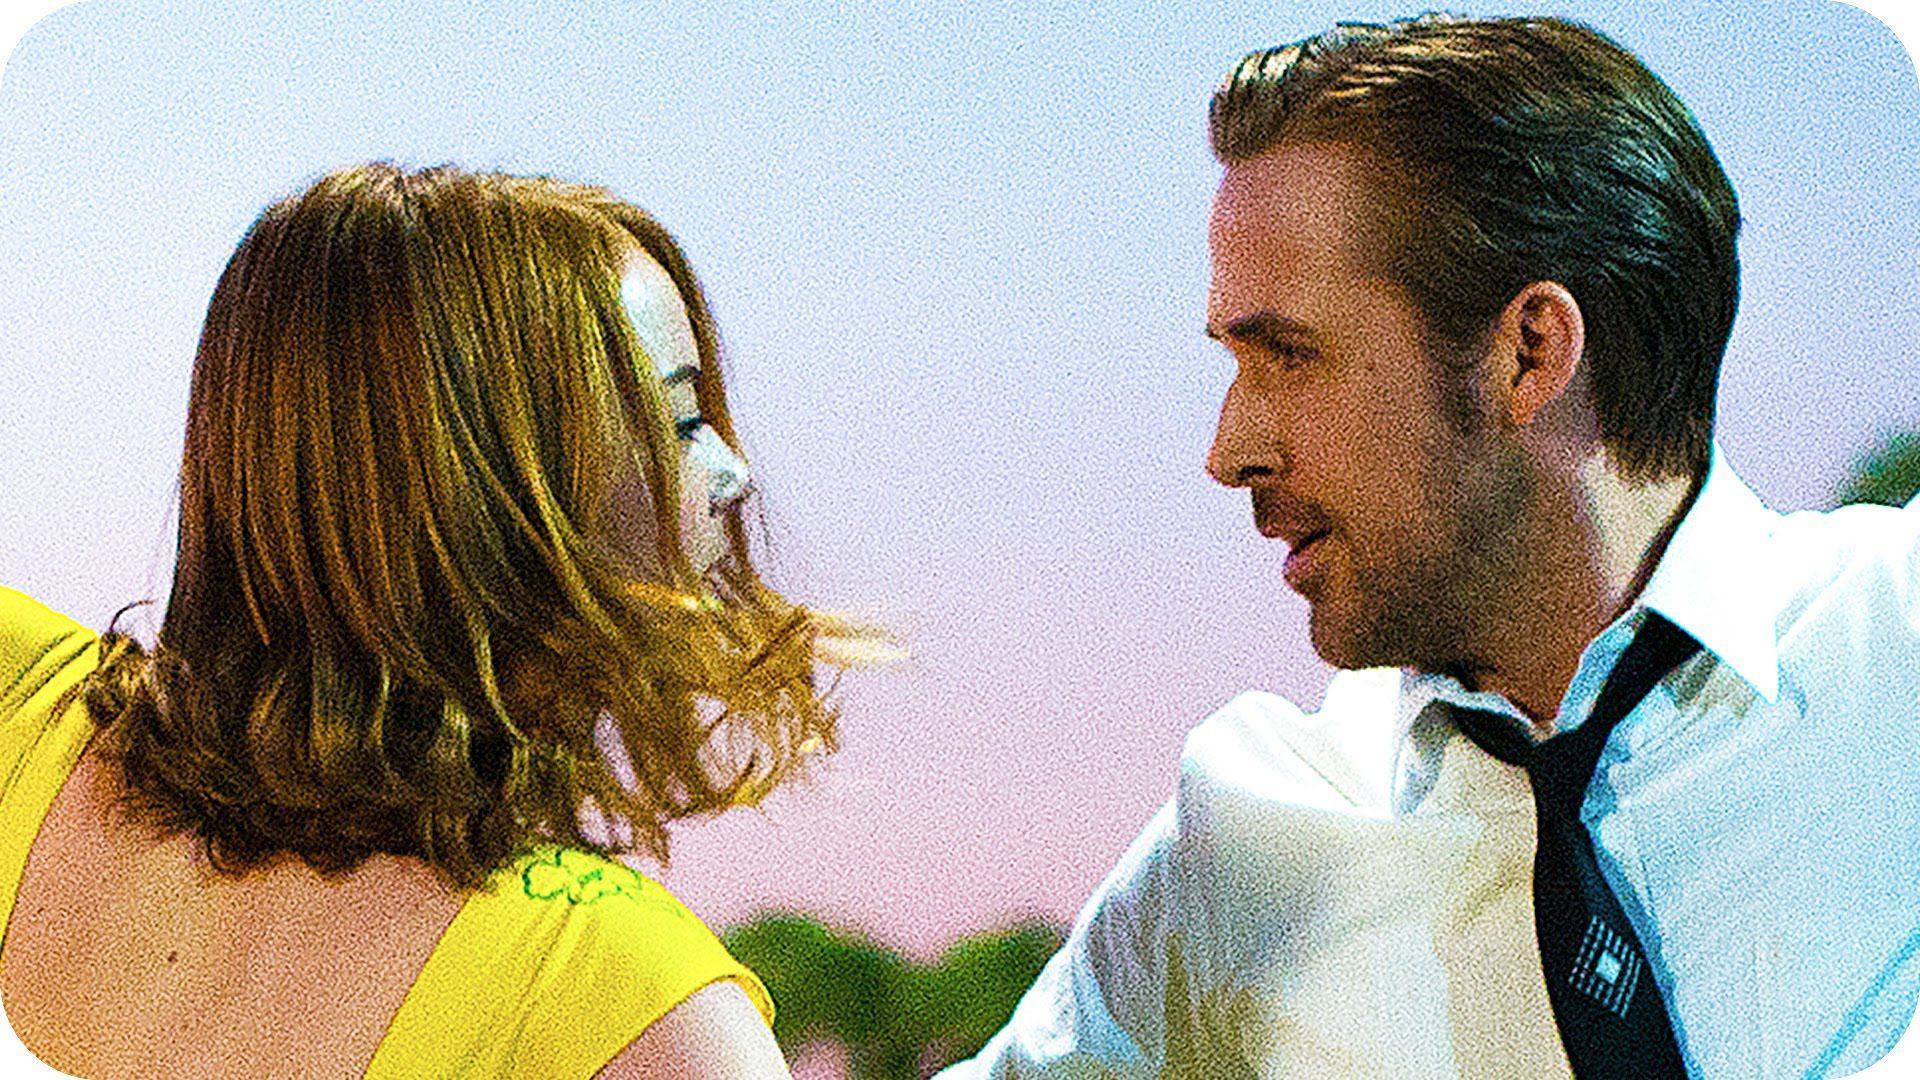 LA LA LAND (2016) Ryan Gosling, Emma Stone Musical